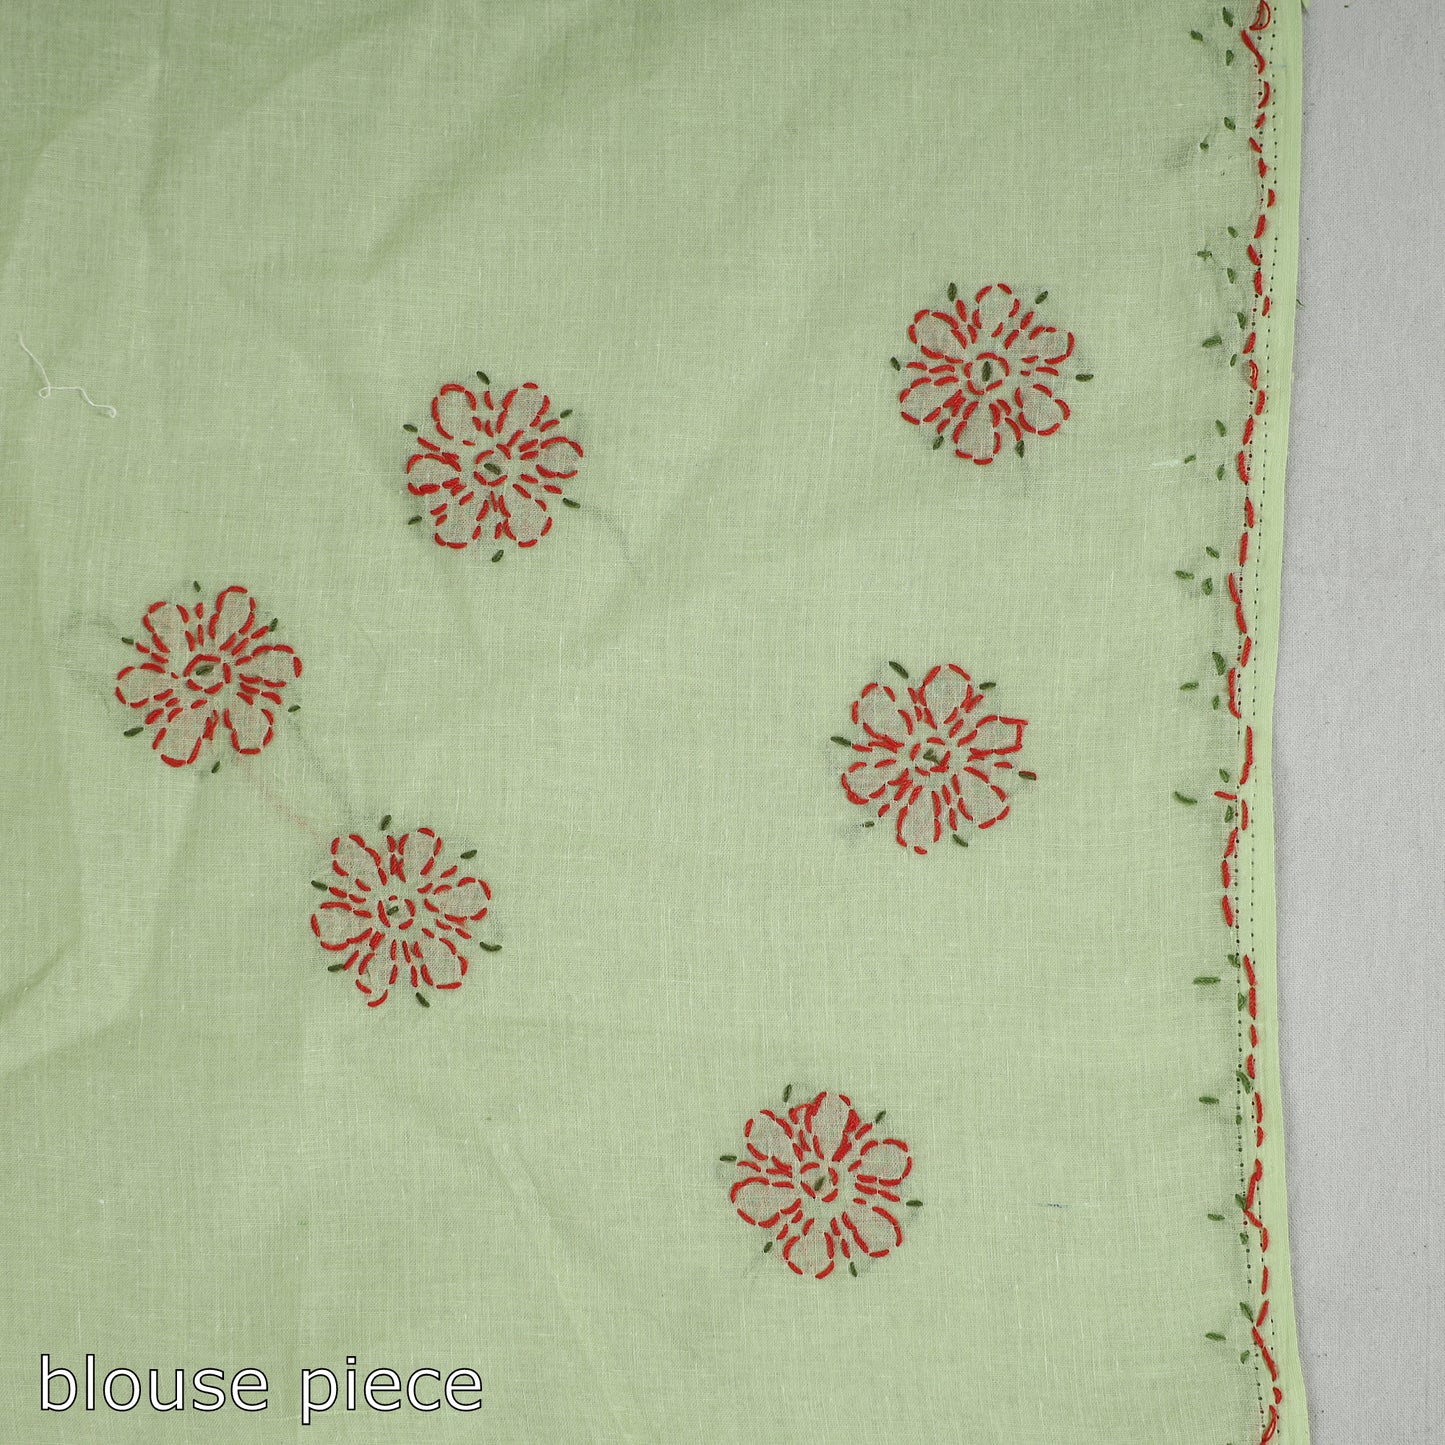 Green - Lucknow Chikankari Hand Embroidery Cotton Saree 61